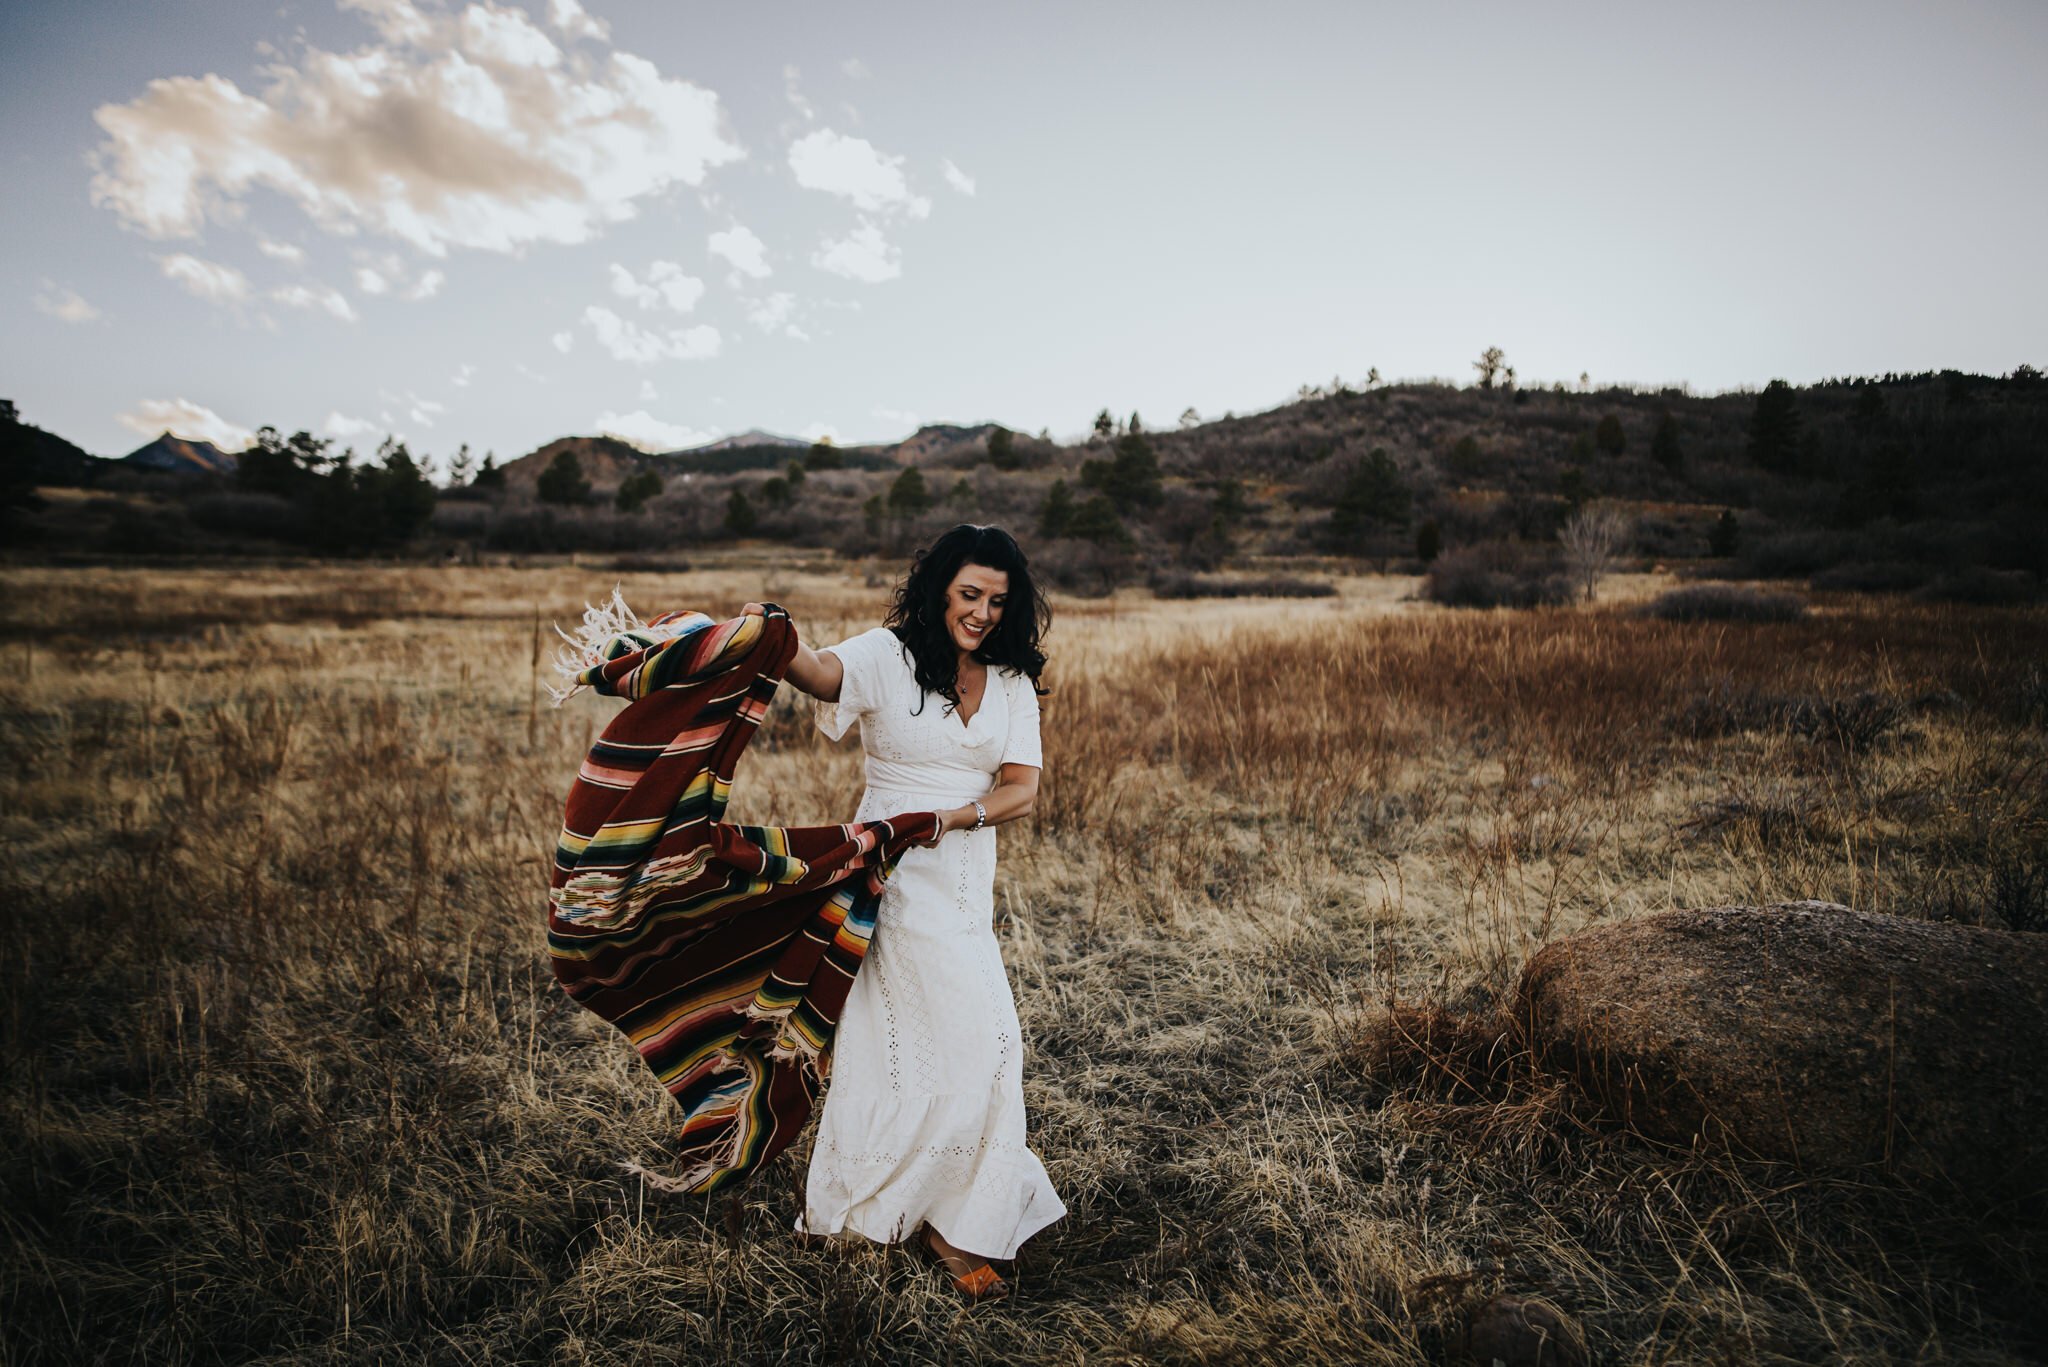 Celi+Turner+Headshots+Colorado+Springs+Colorado+Sunset+Mountains+Field+Woman+Wild+Prairie+Photography-17-2020.jpeg